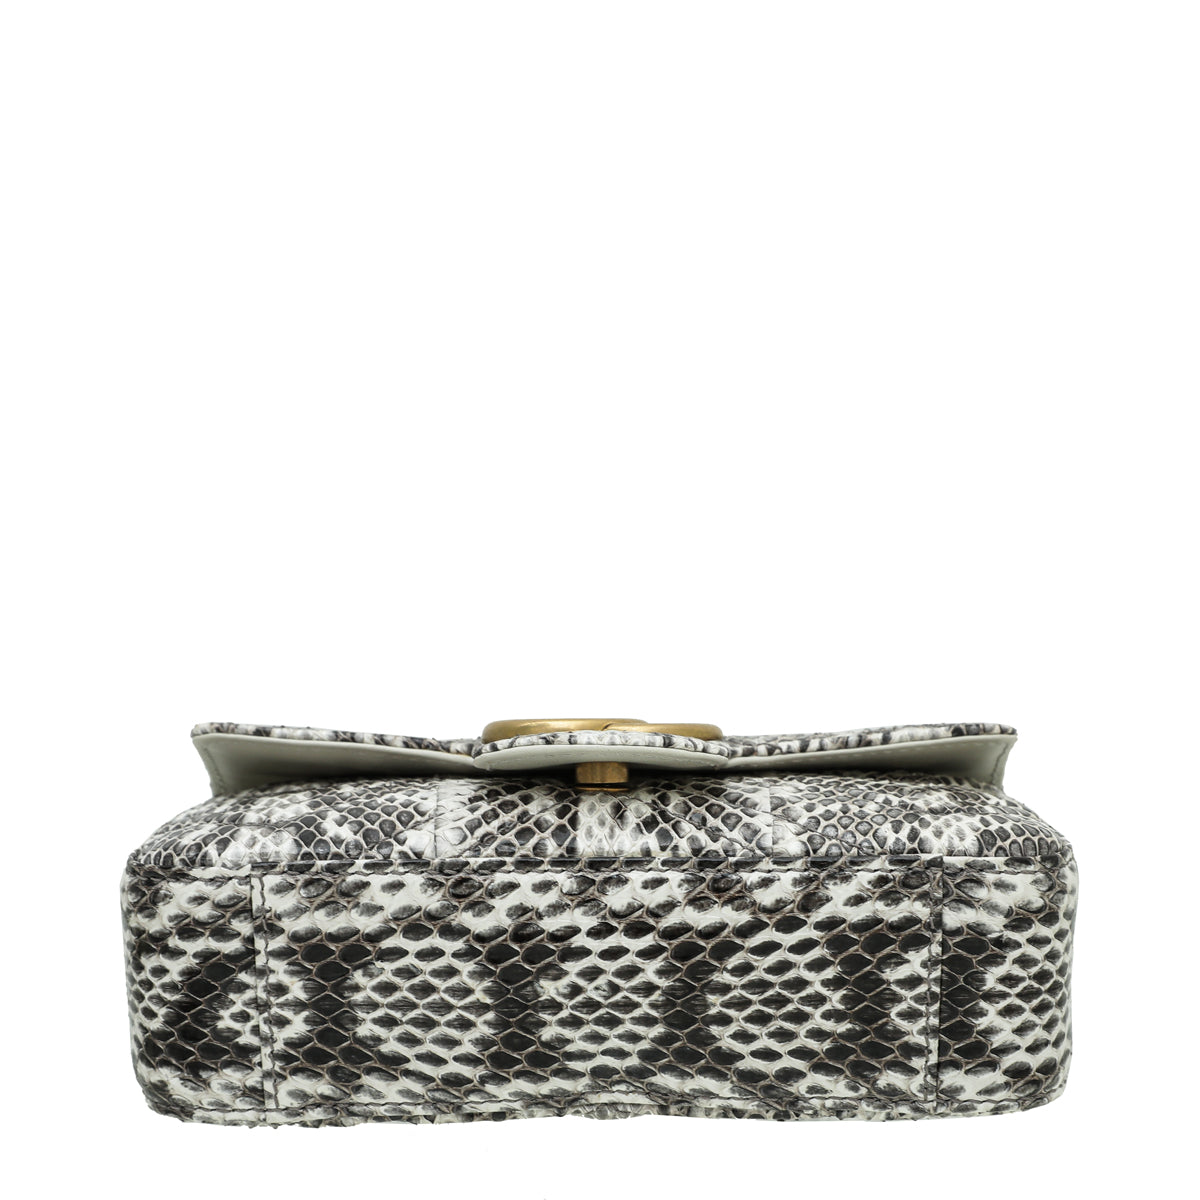 Gucci® GG Marmont Python Super Mini Bag - Saint John's